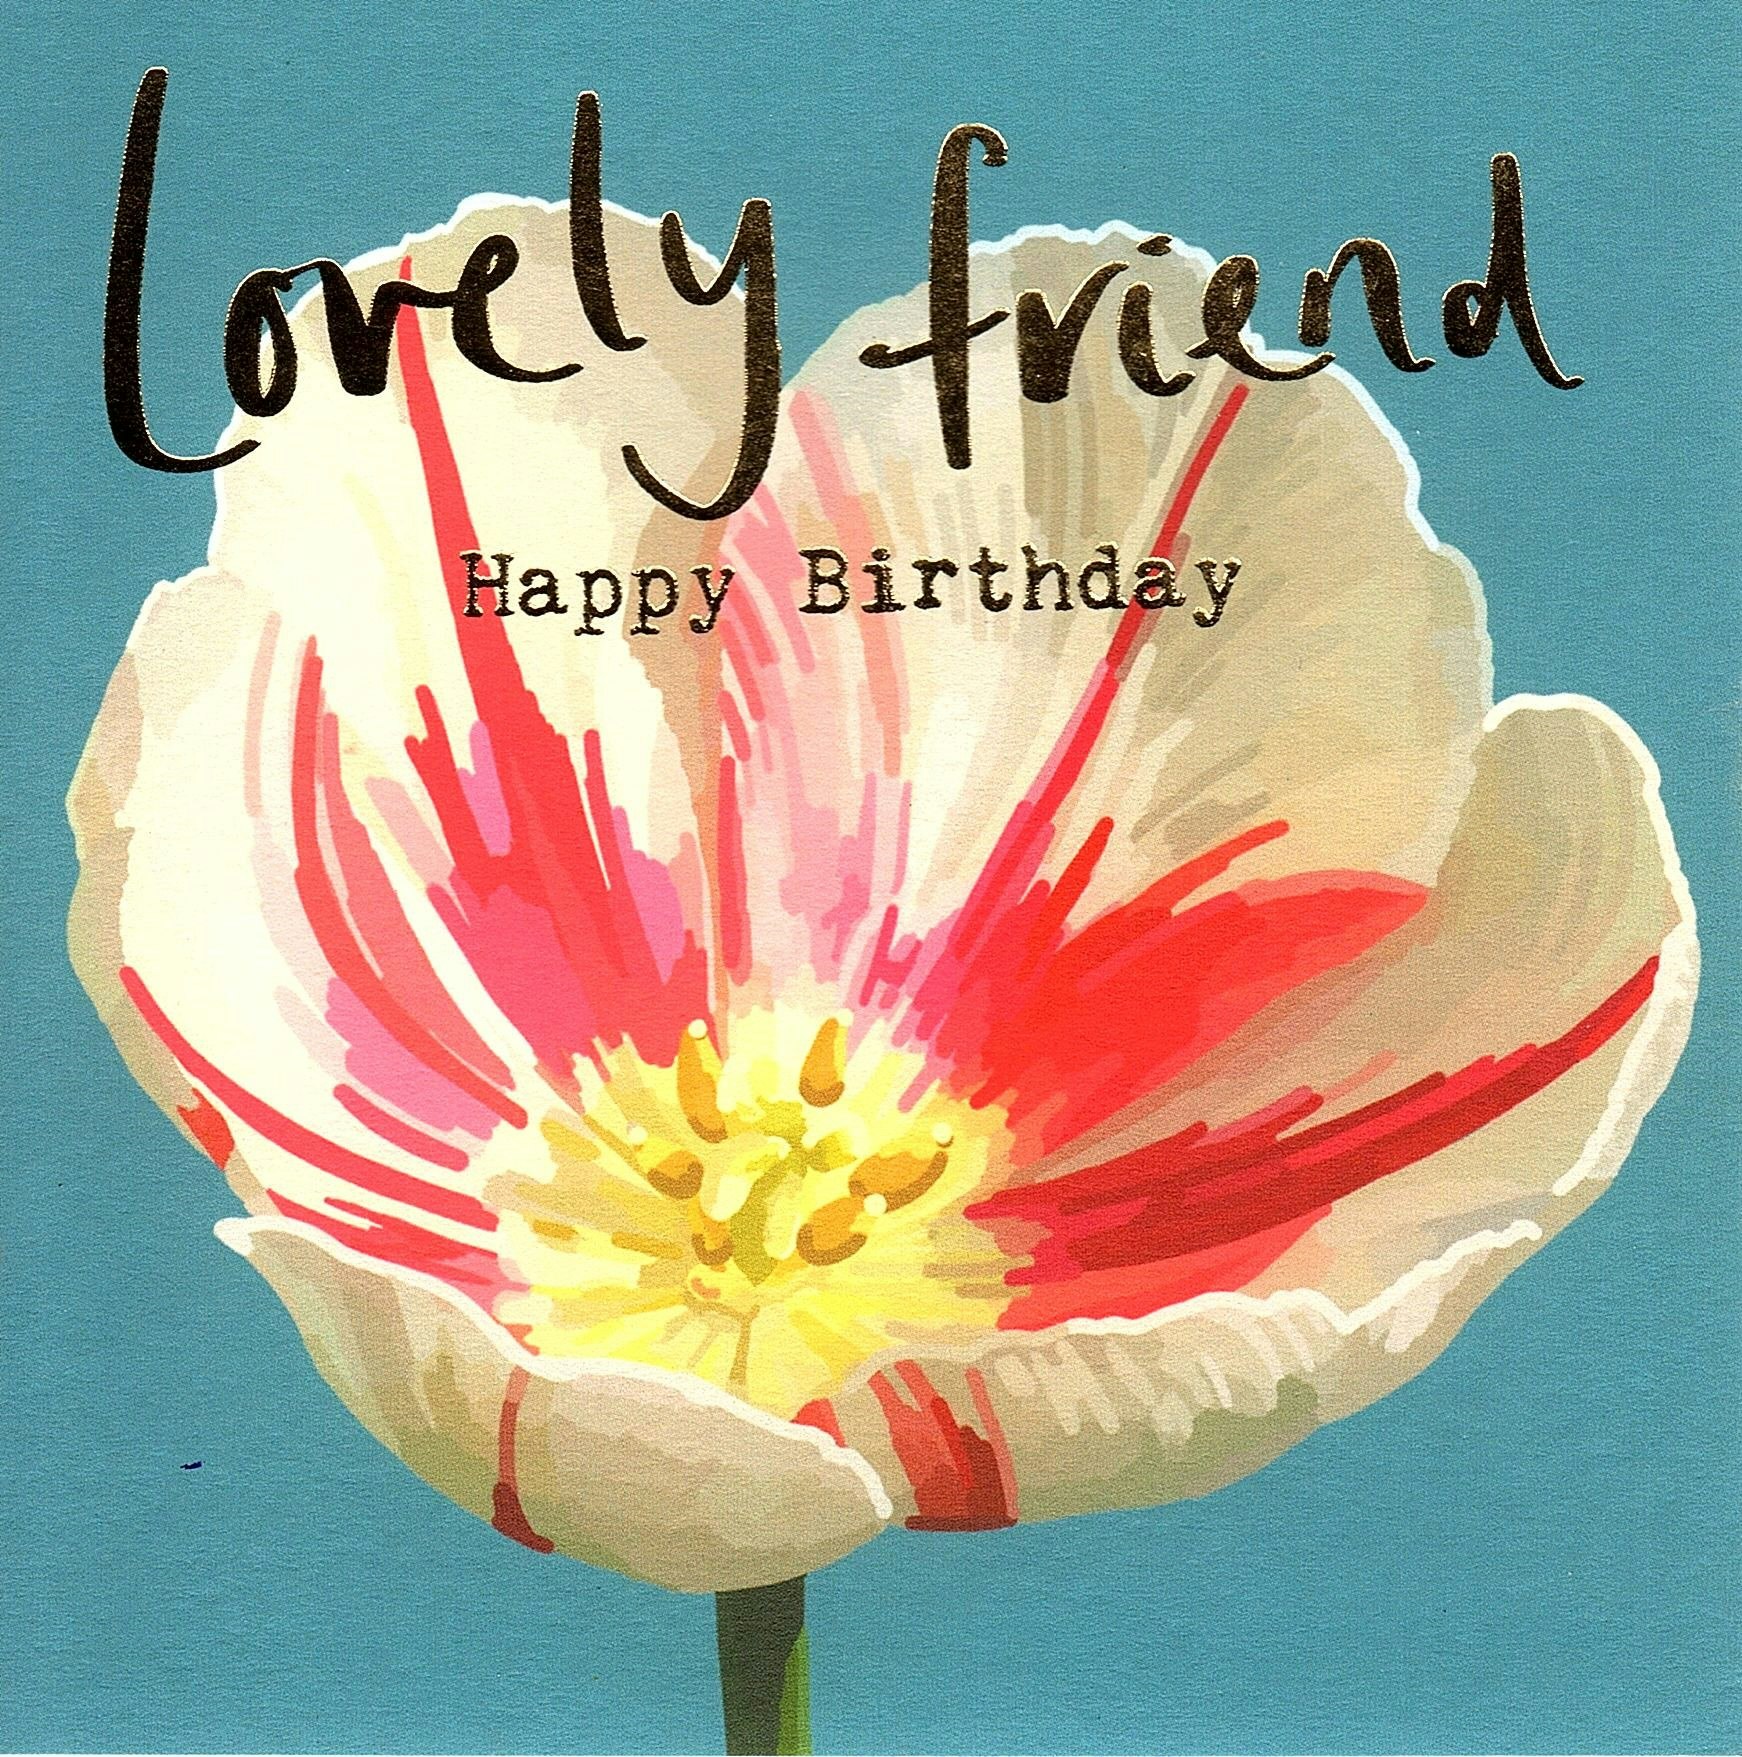 Kort Sarah Kelleher `Lovely Friend Happy Birthday`